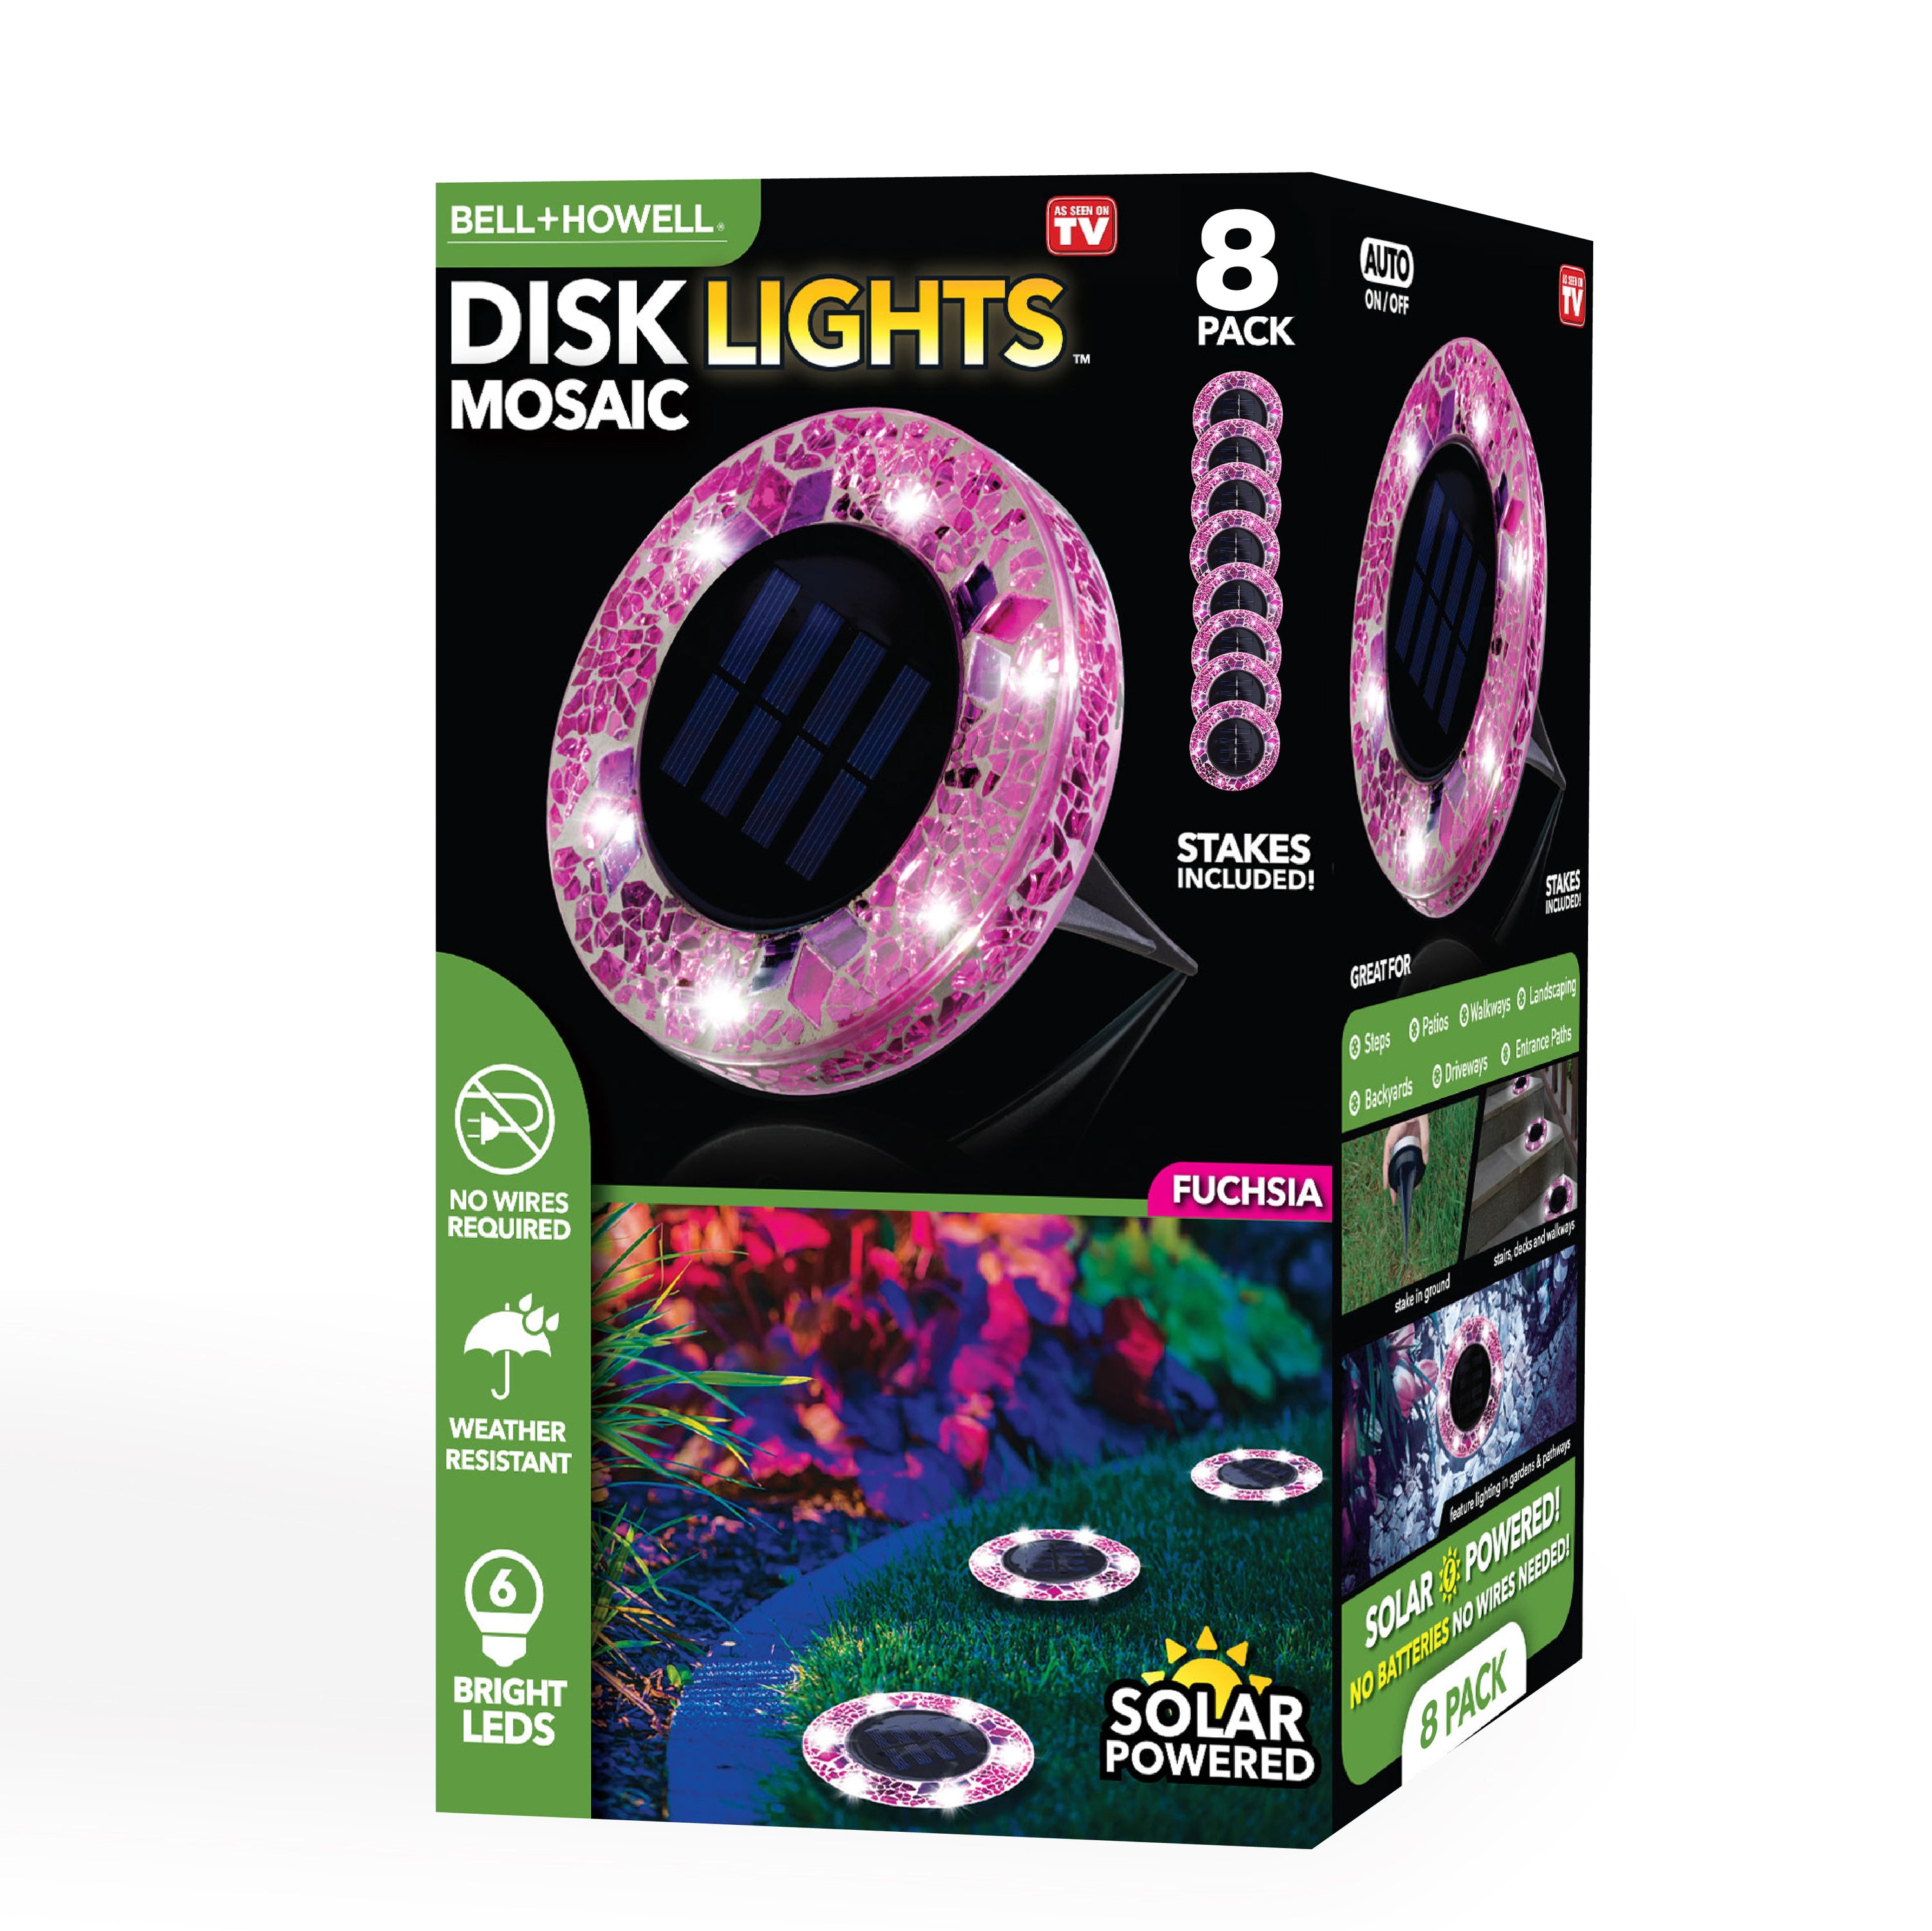 Bell + Howell Pathway & Landscape Disk Light 8 Pack Mosaic Fuschia